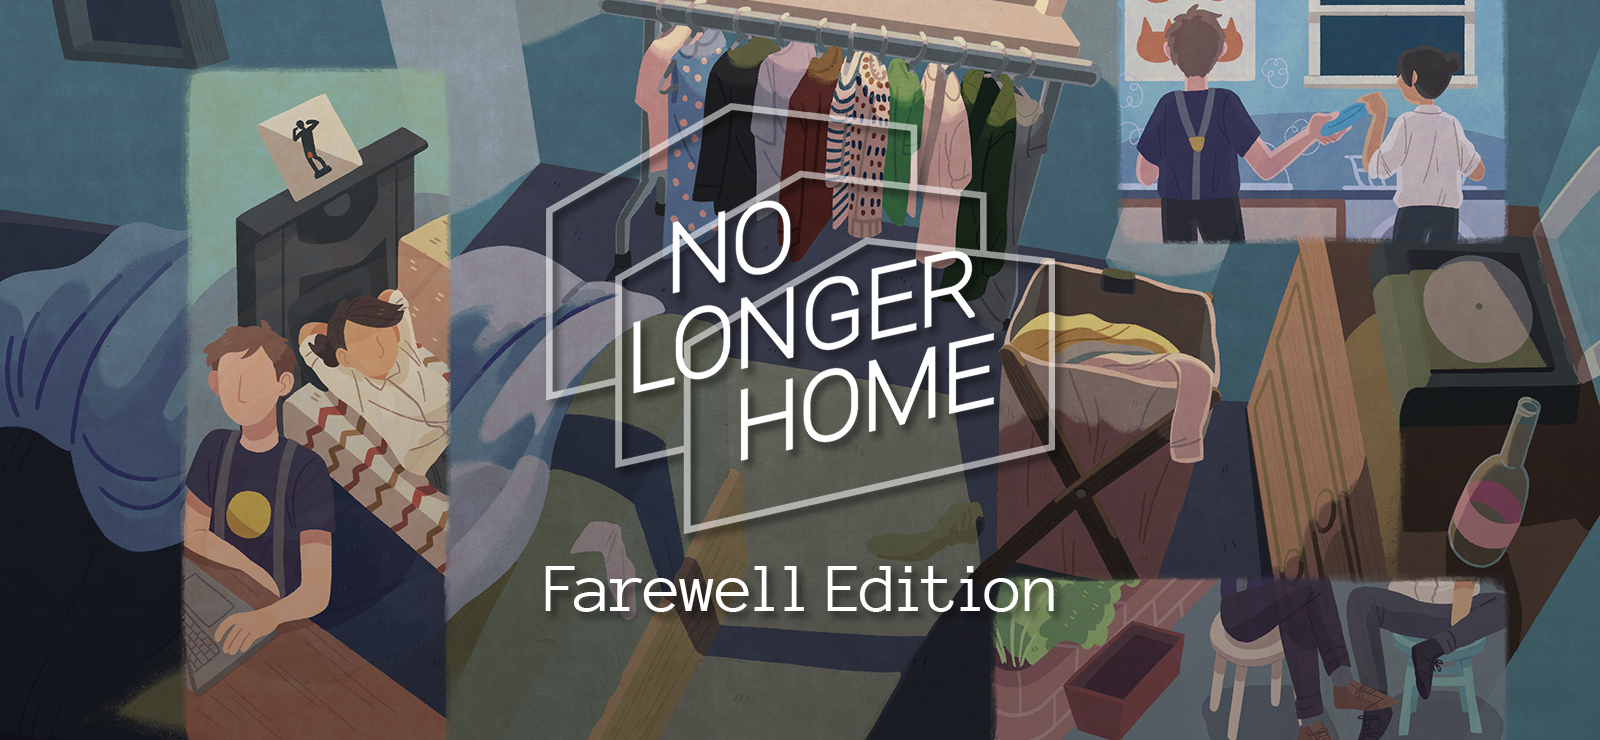 No Longer Home Farewell Edition